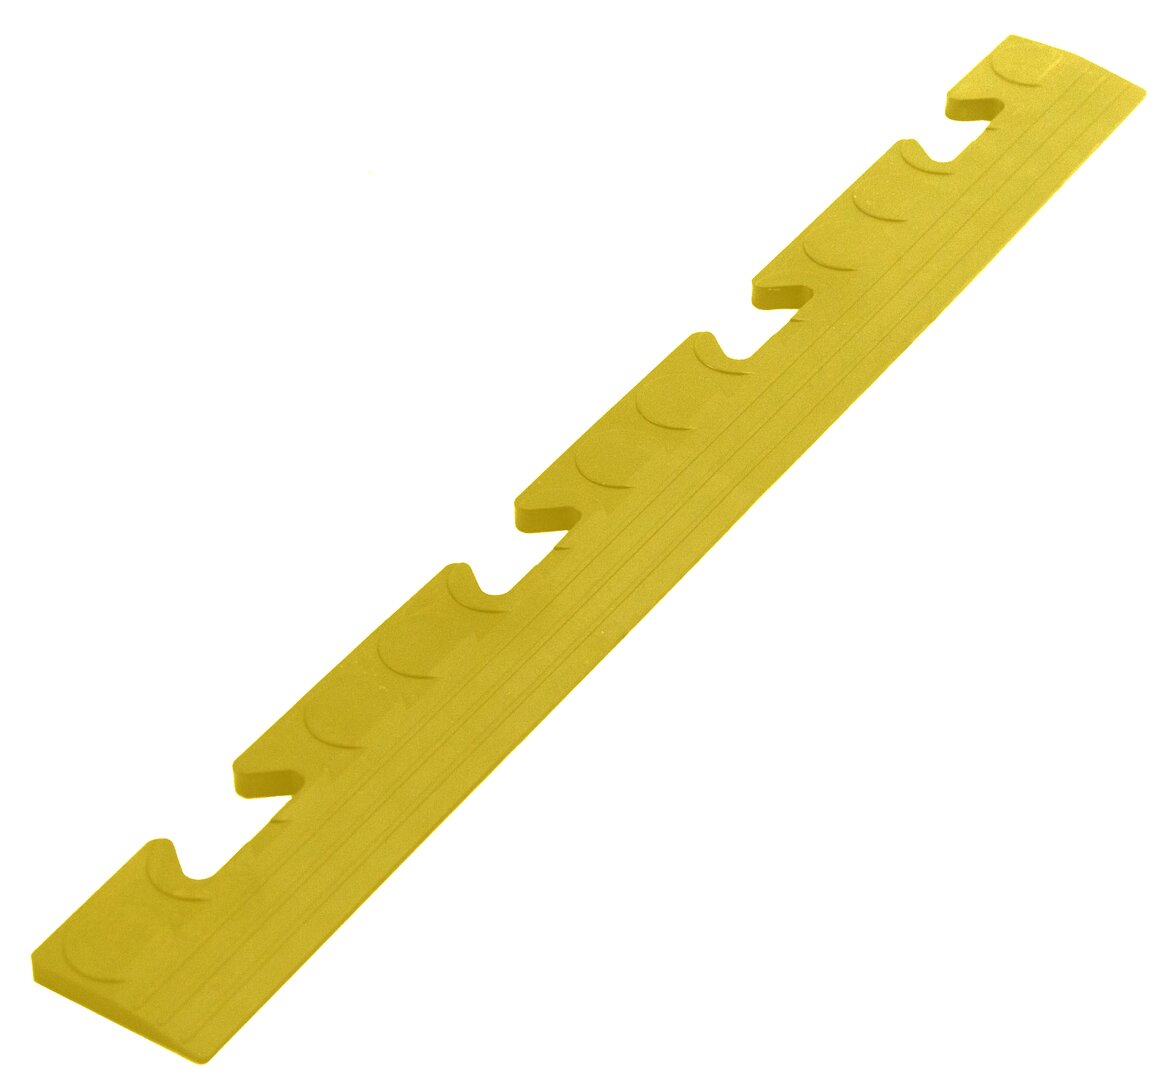 Žlutý PVC vinylový nájezd "samice" pro dlaždice Tenax (bubbles) - délka 48 cm, šířka 5,1 cm, výška 0,8 cm